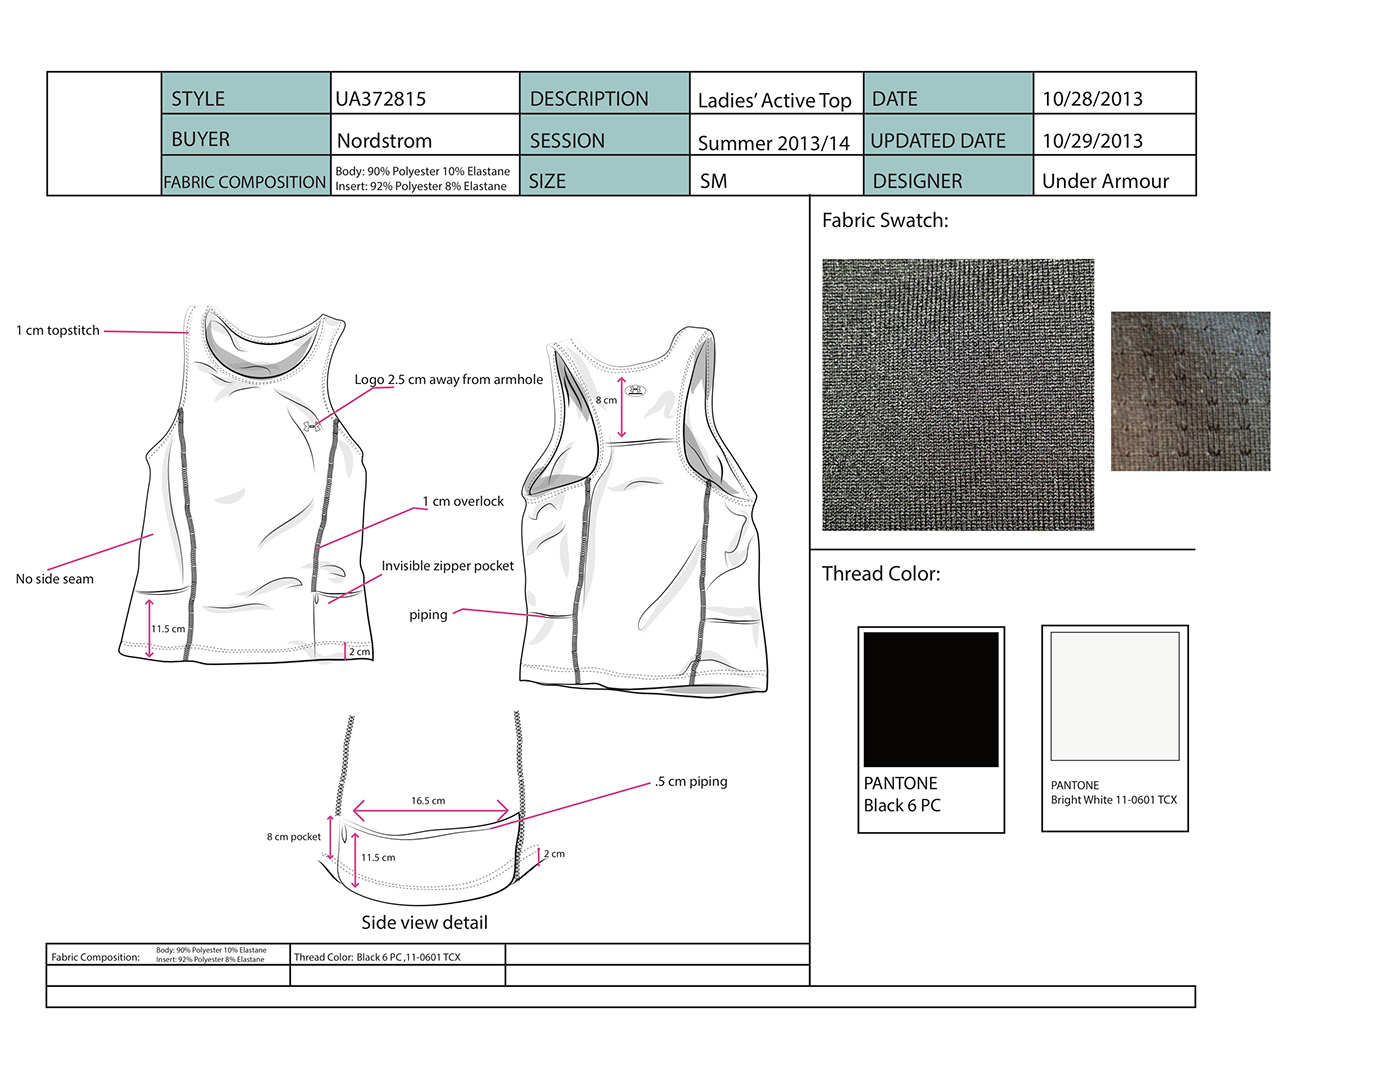 Fashion  TECH PACKS technical flats adobe Illustrator photoshop wacom Digital Art  Garments cad